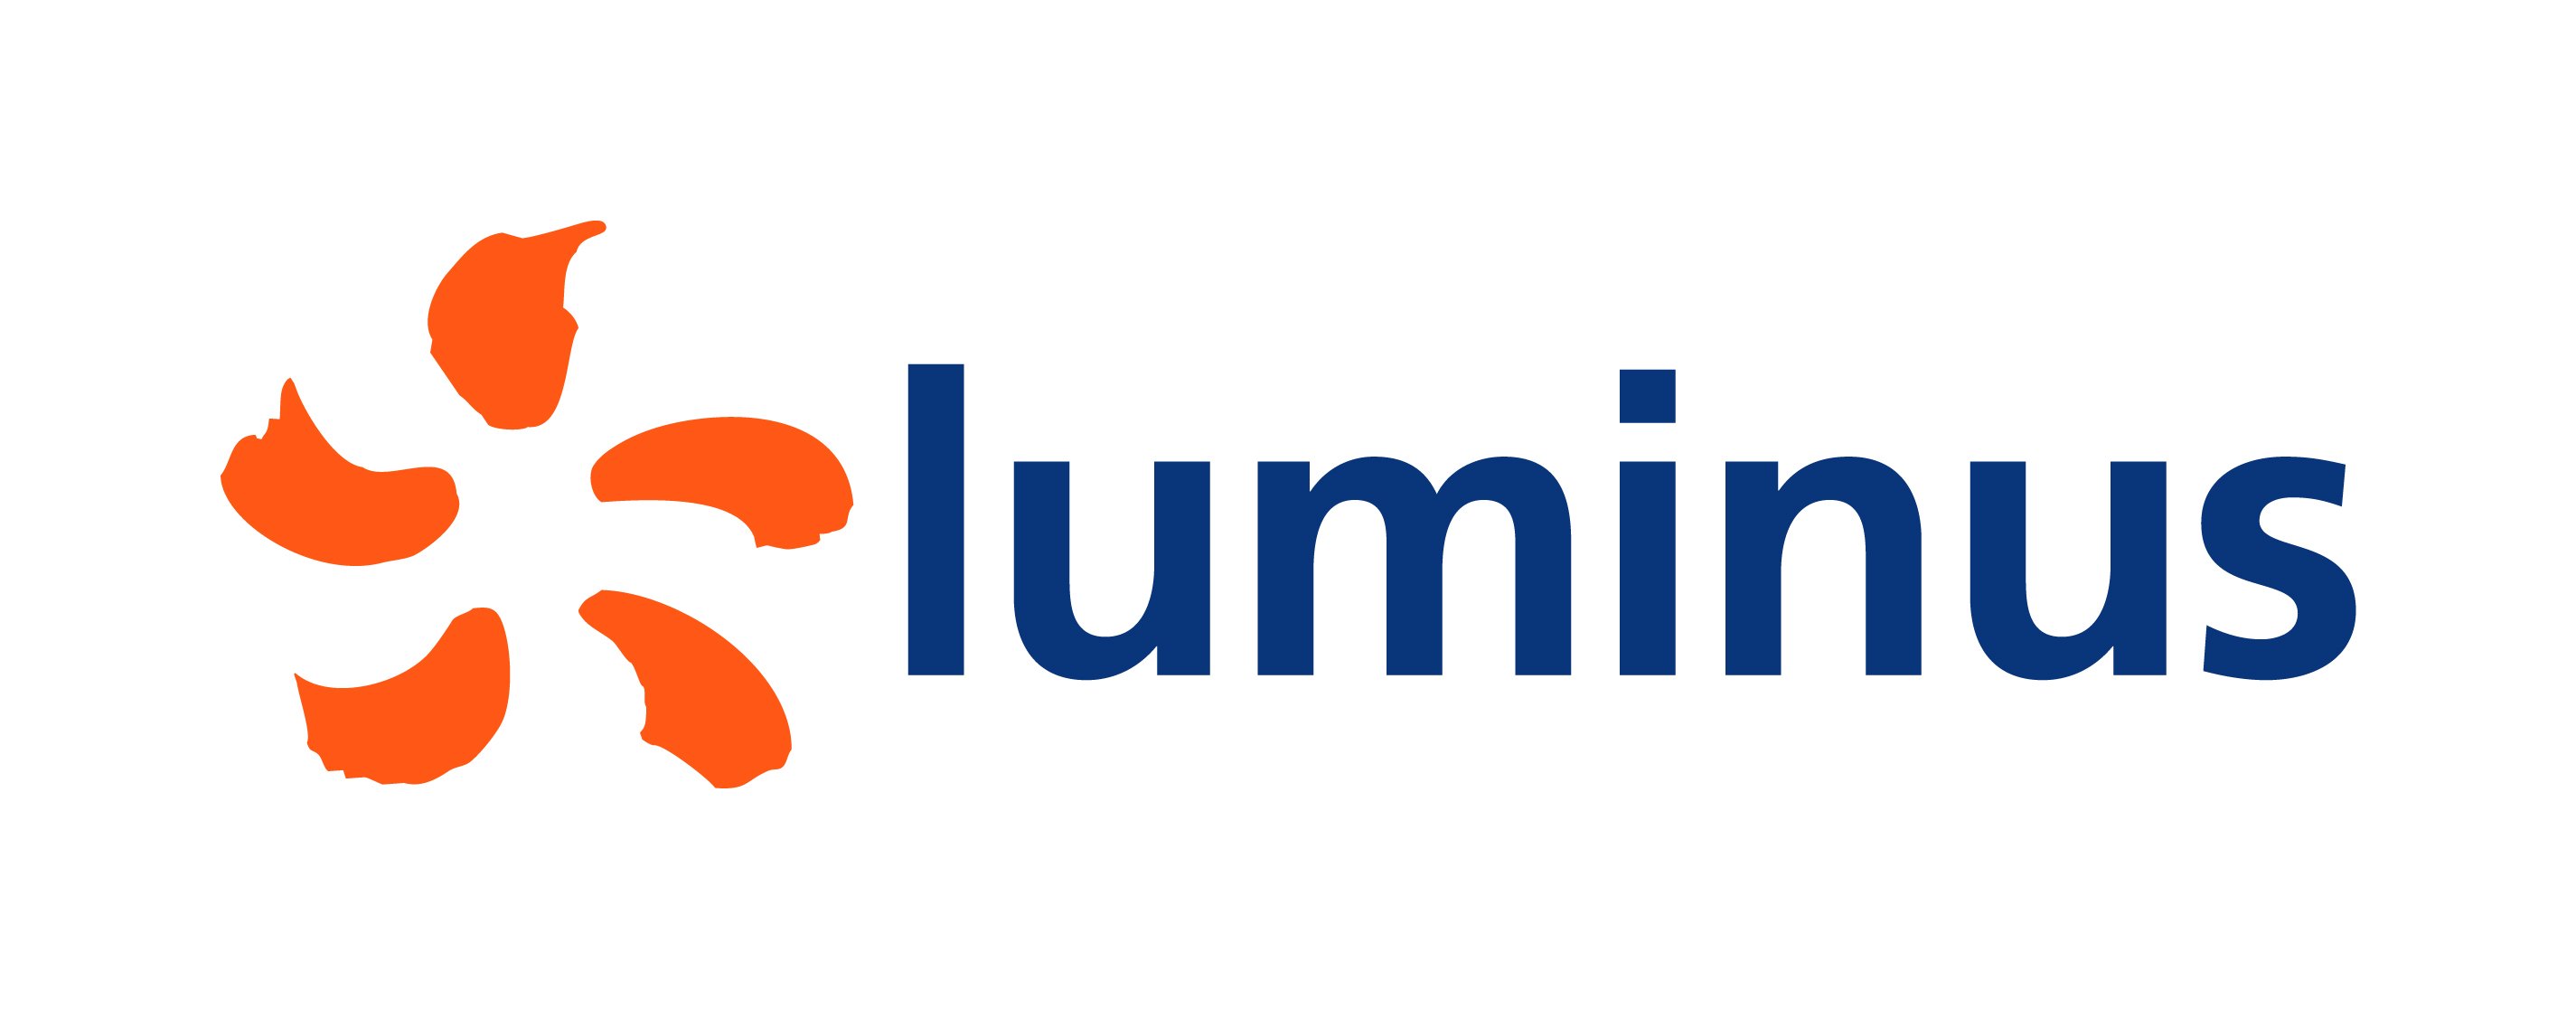 Logo Luminus